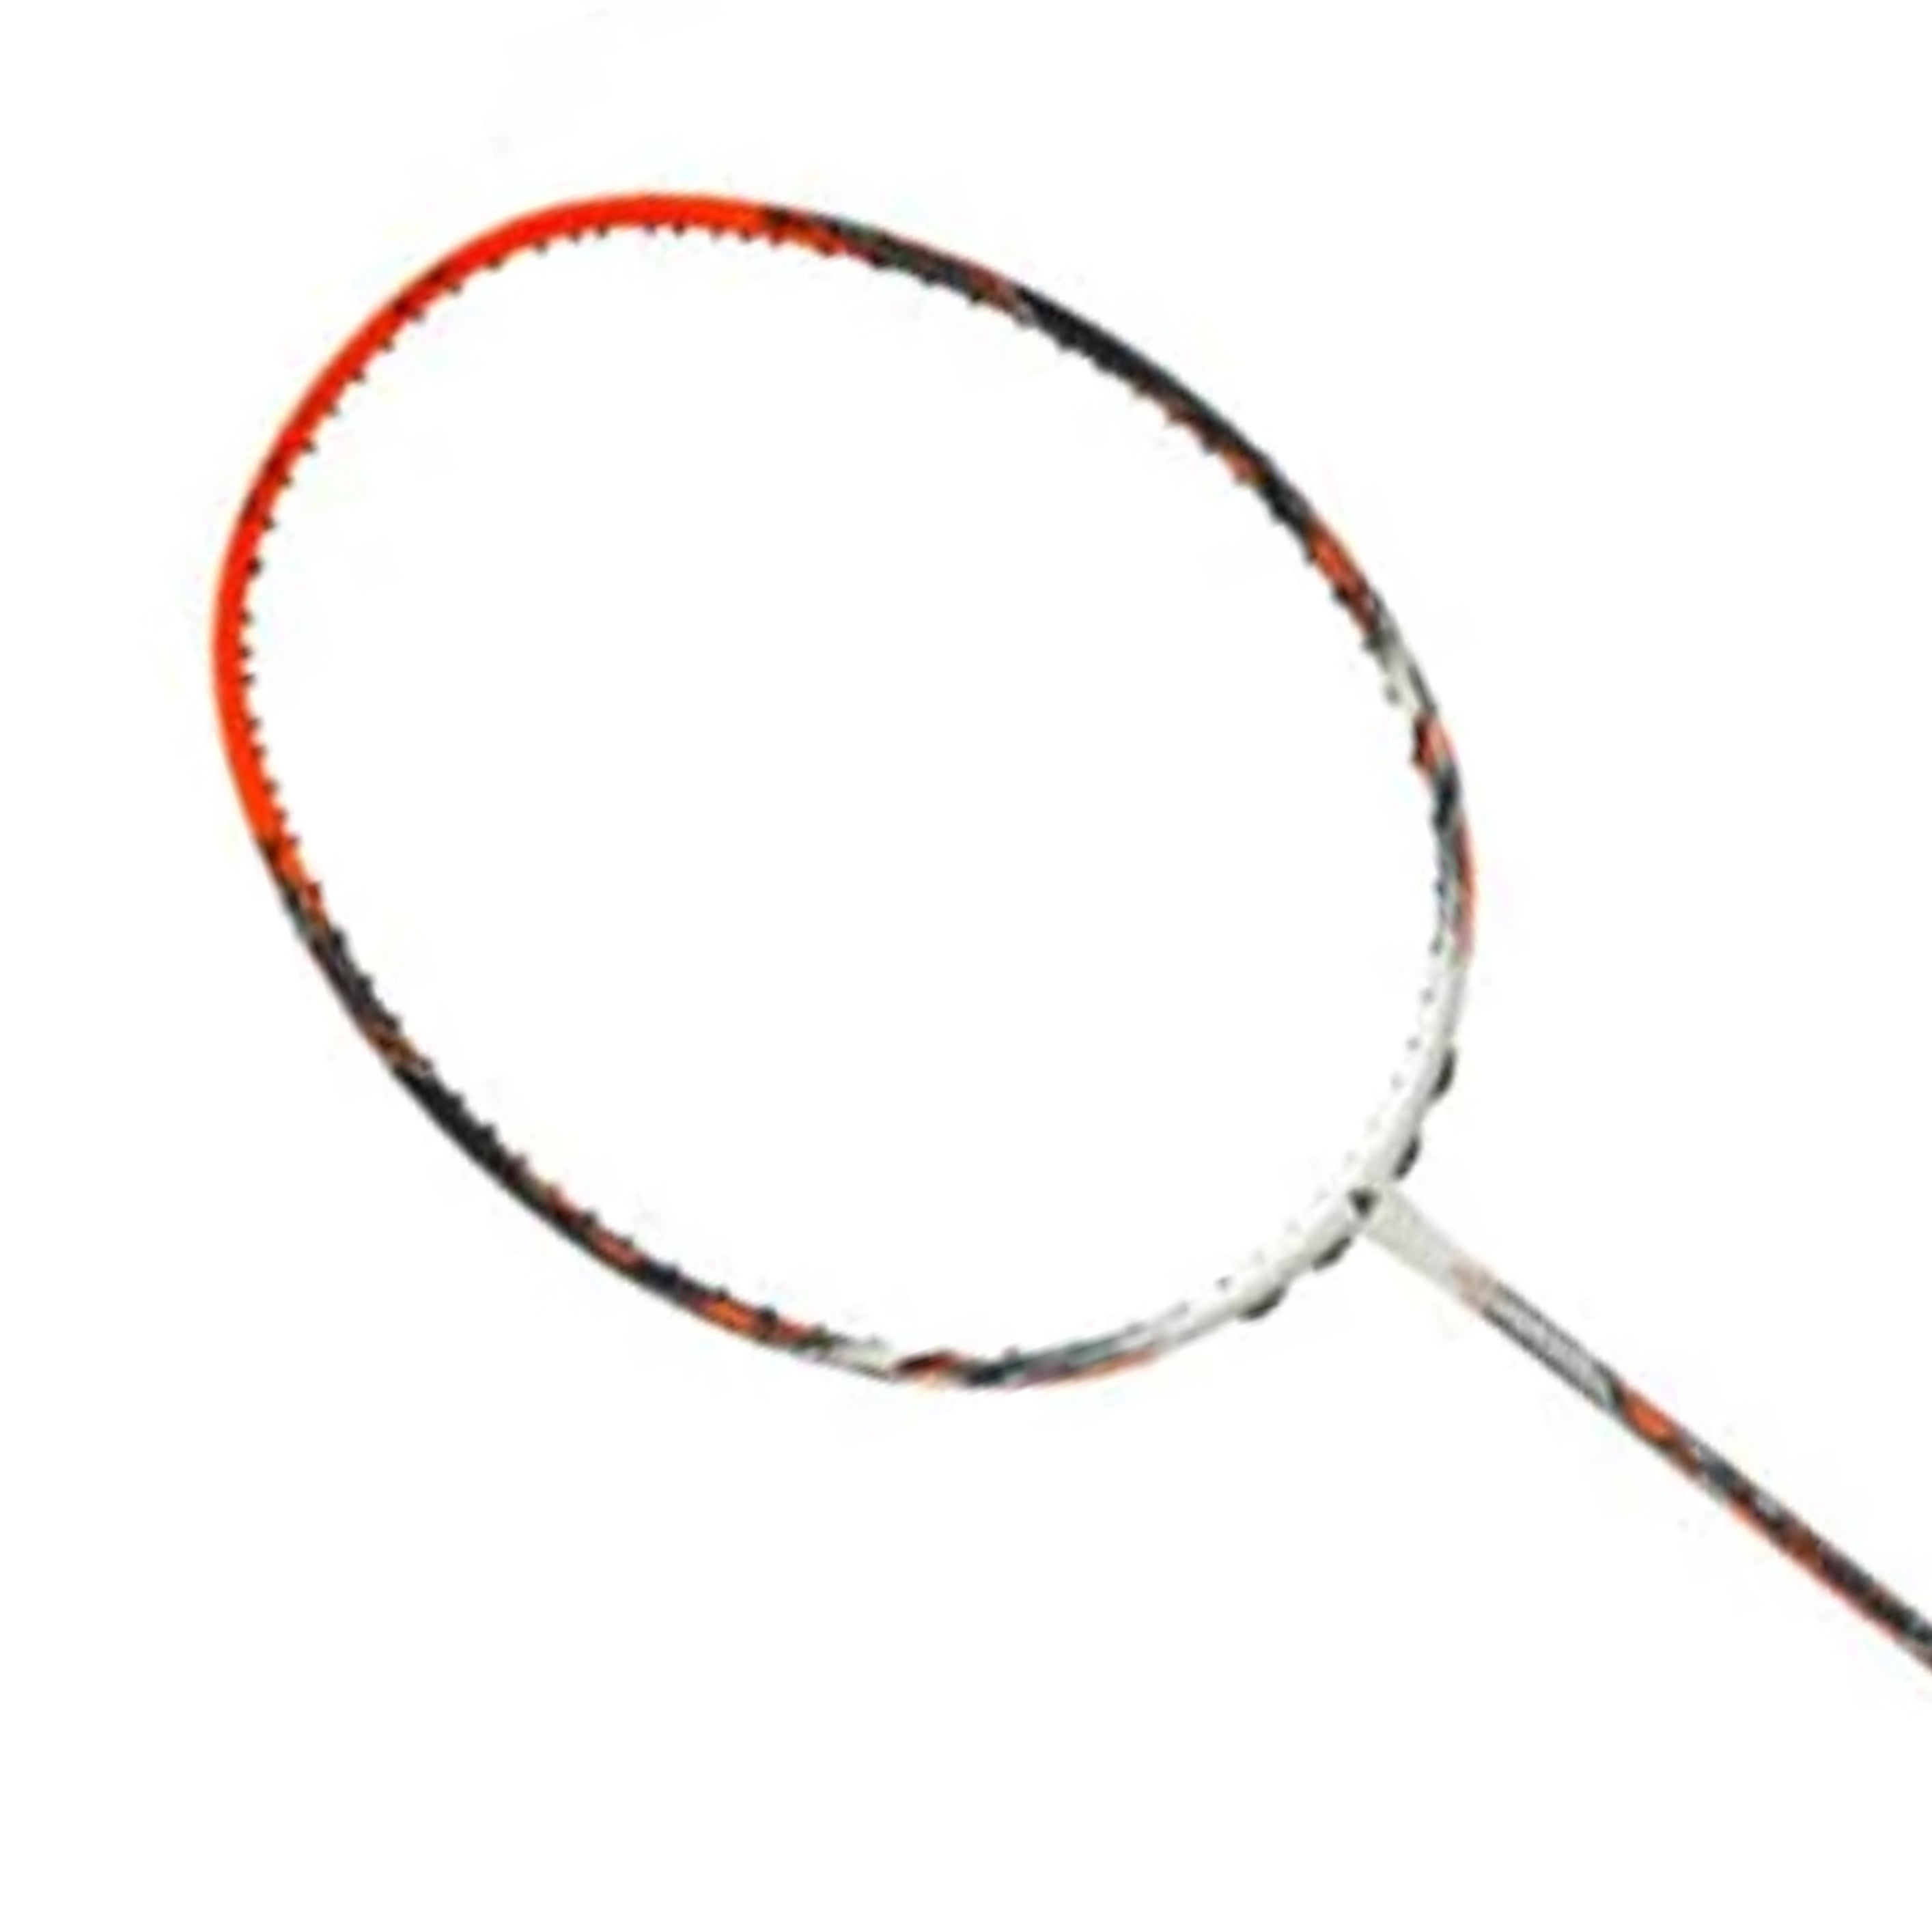 Force F7 Unstrung Badminton Racket (Orange)